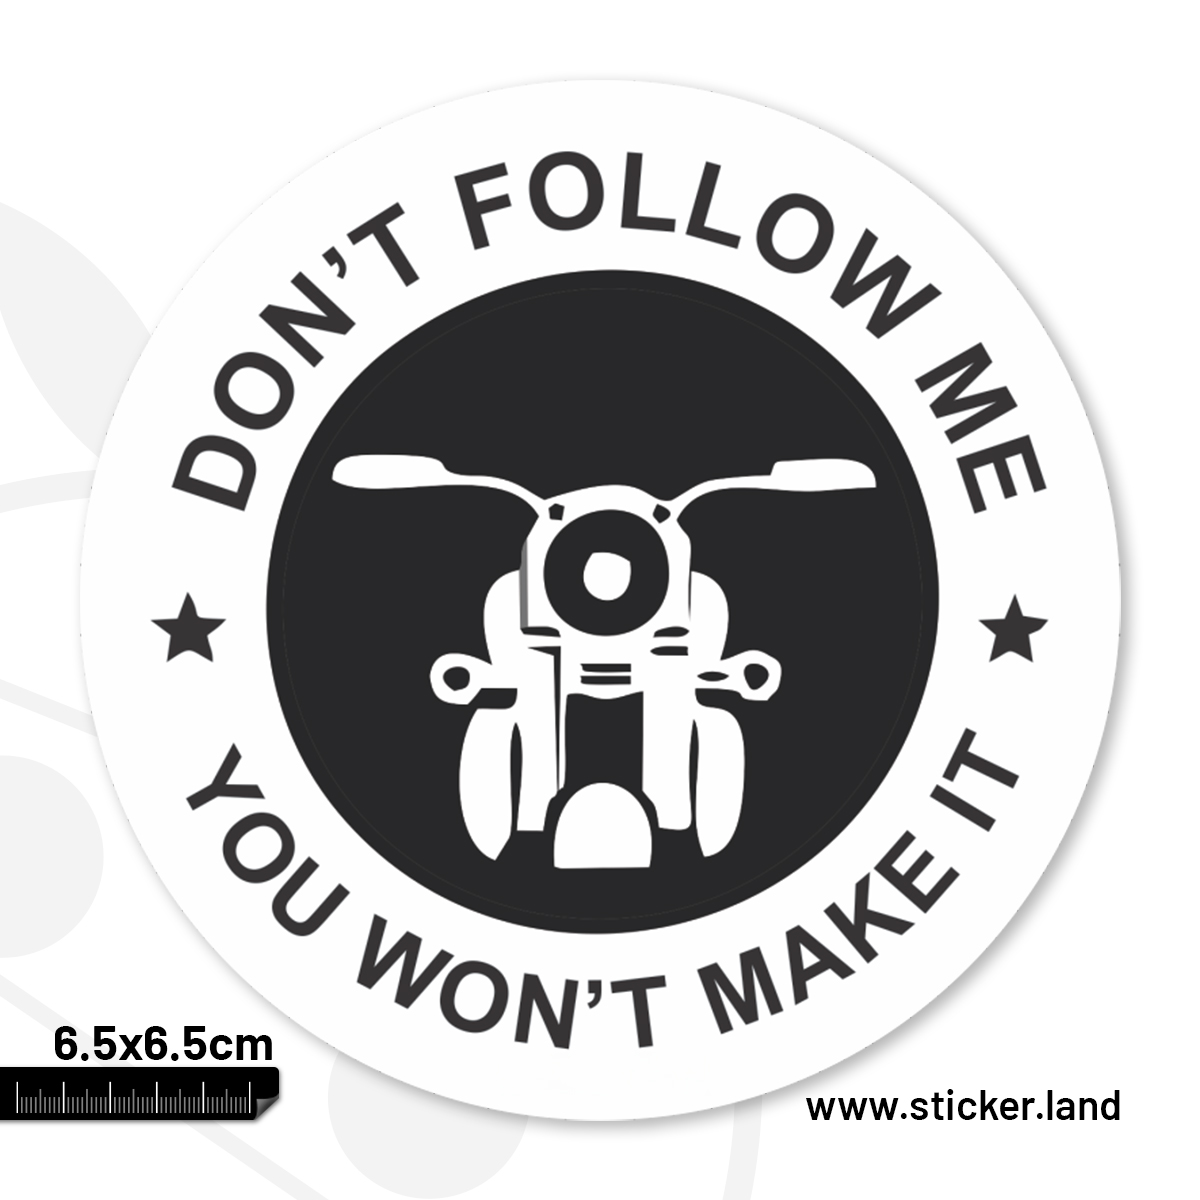 Don't follow me unless you're ready for an adventure! 🚫🚶‍♂️

Buy now: sticker.land/products/stick…

#AdventureAwaits #Trailblazer #ExploreMore #OffTheBeatenPath #Wanderlust #LiveBoldly #DareToFollow